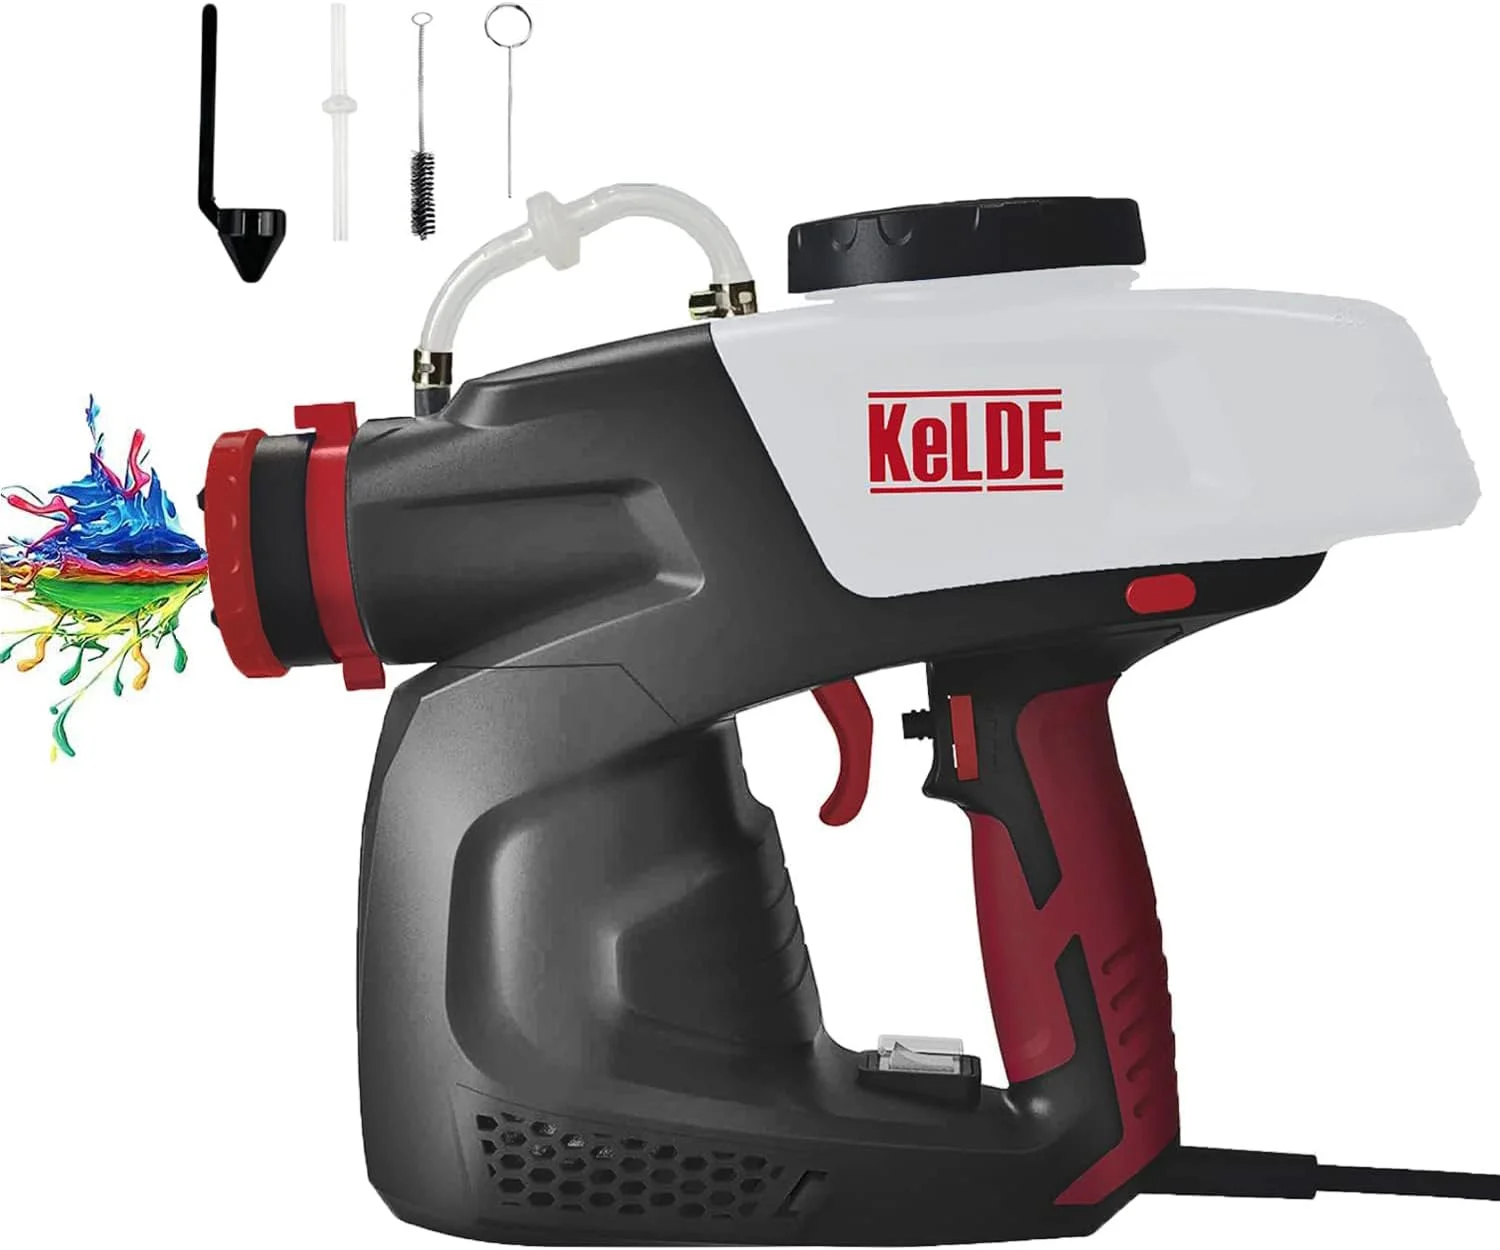 KeLDE 600W HVLP Paint Sprayer,High-Speed Motor,Versatile Spray Patterns,DIY Projects,Time Savings